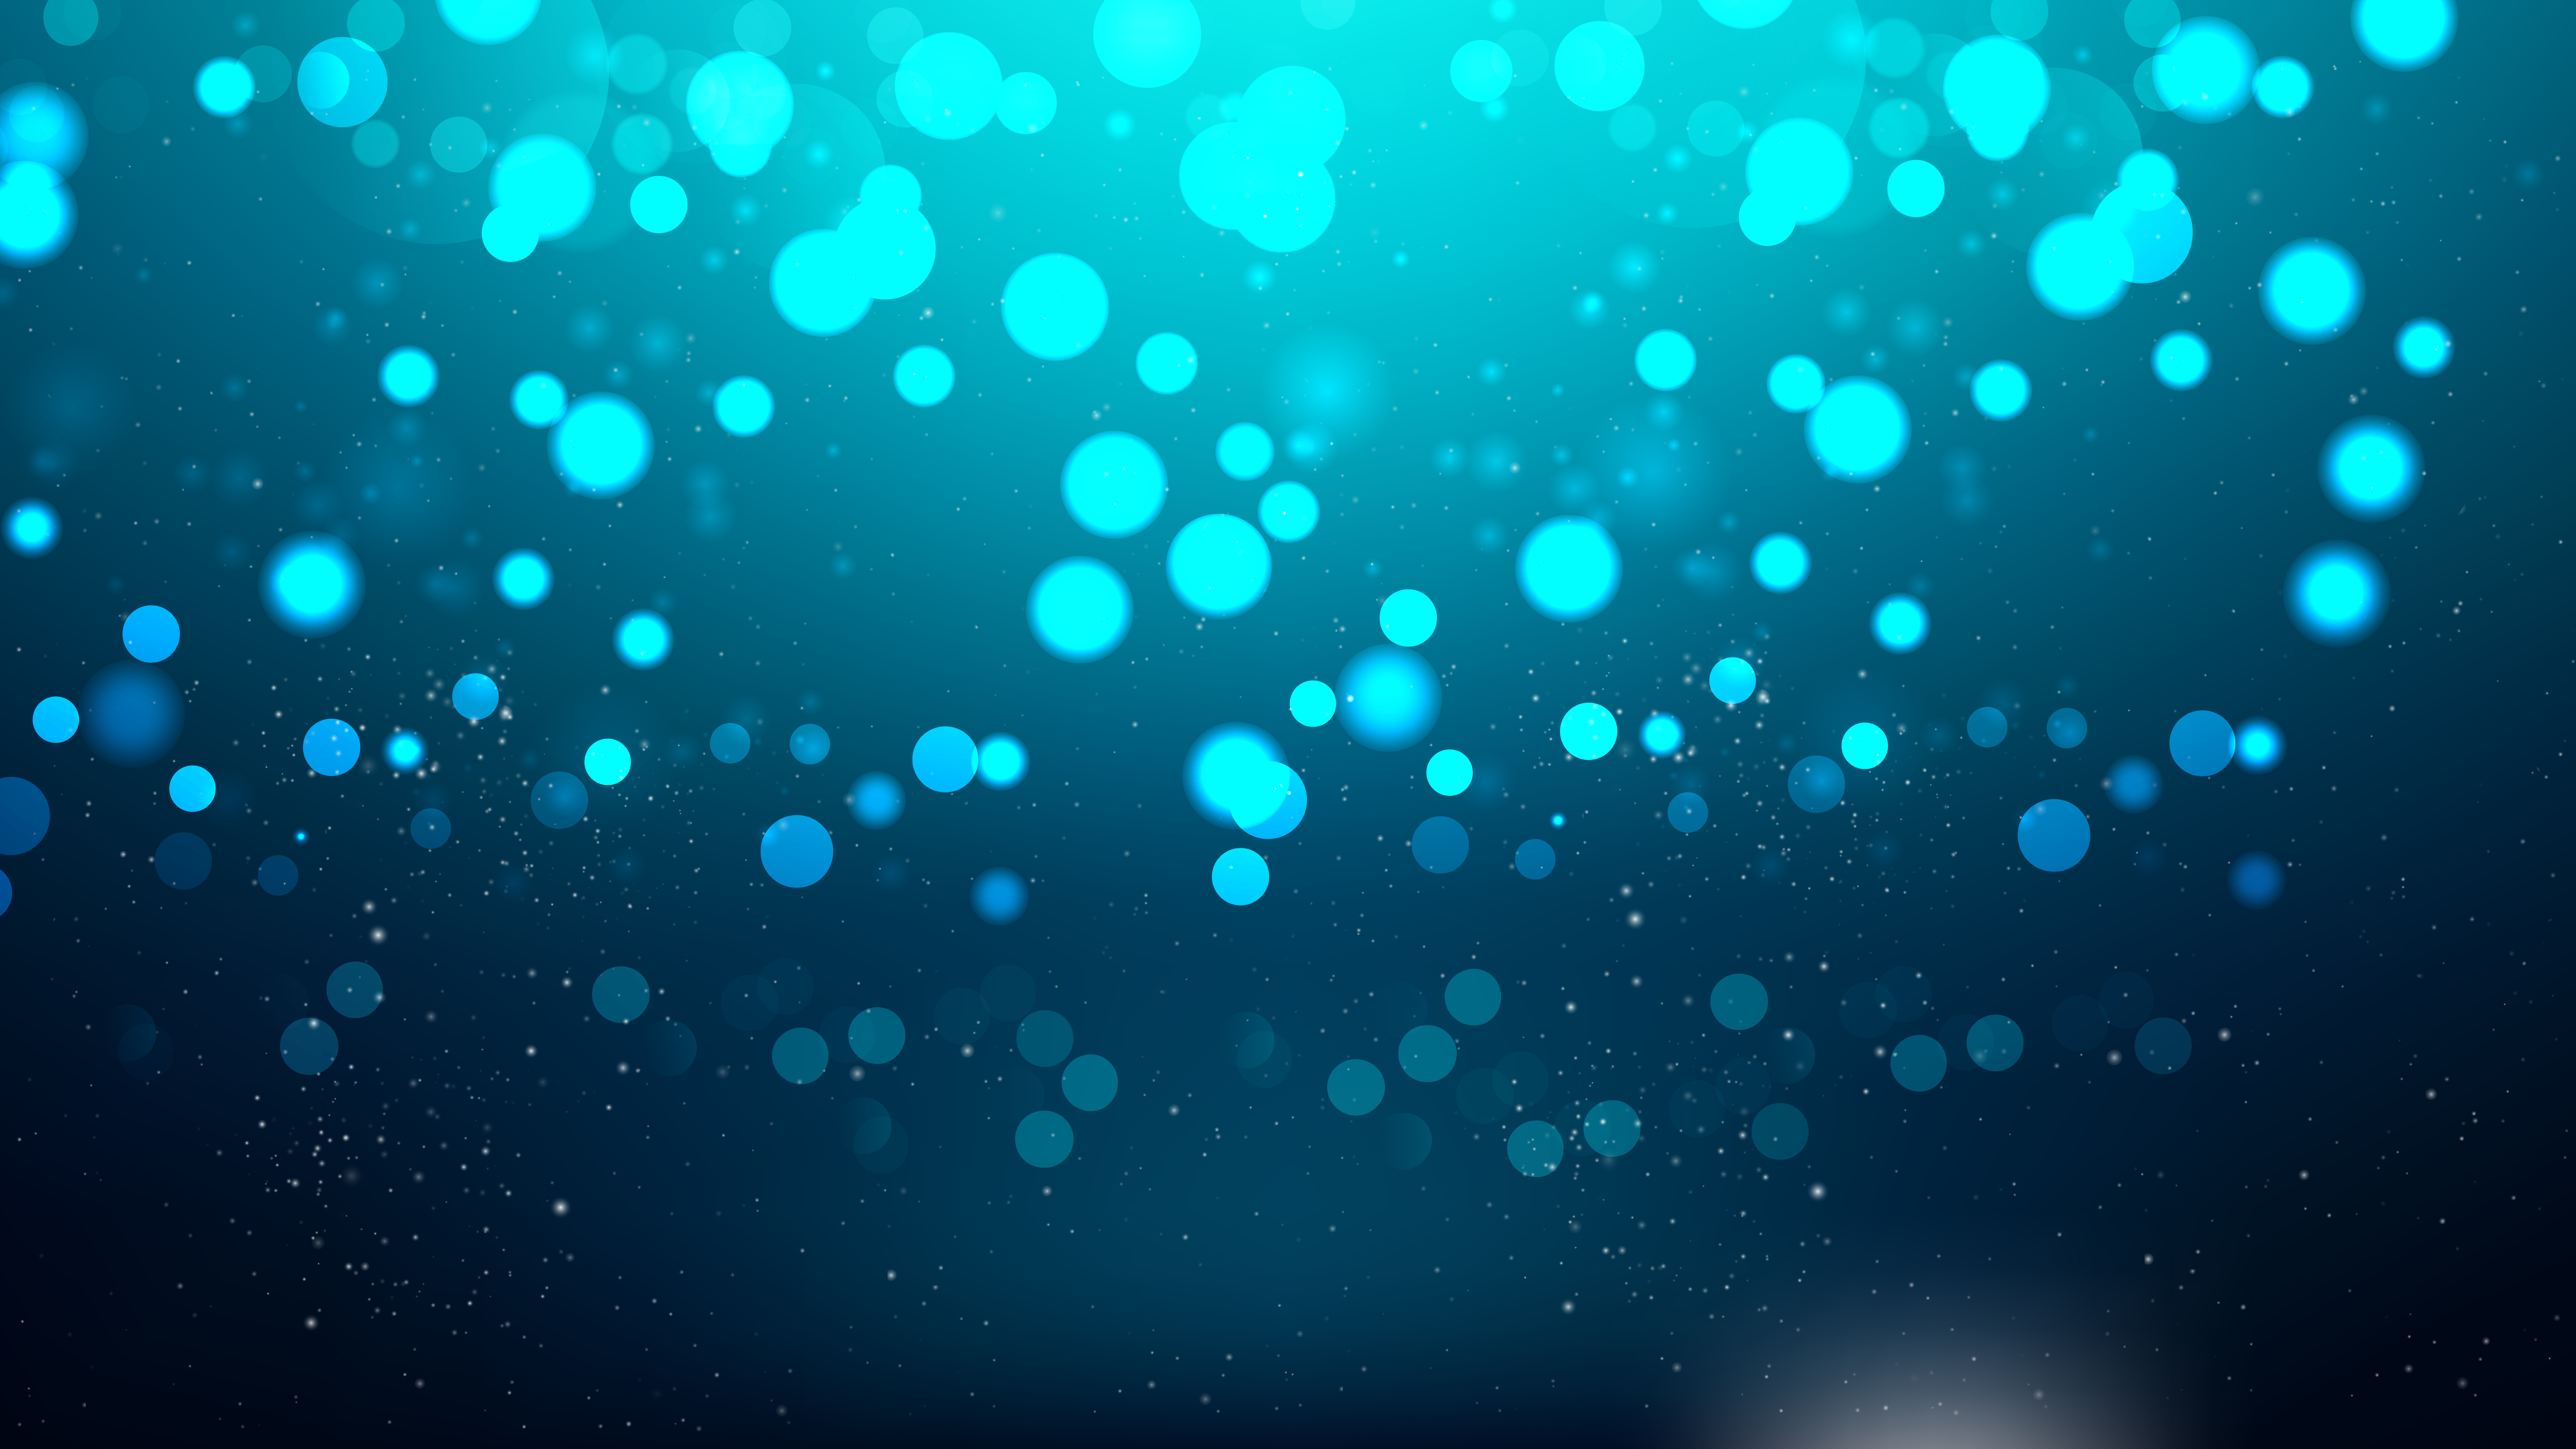 Free Black and Blue Blur Lights Background Illustrator